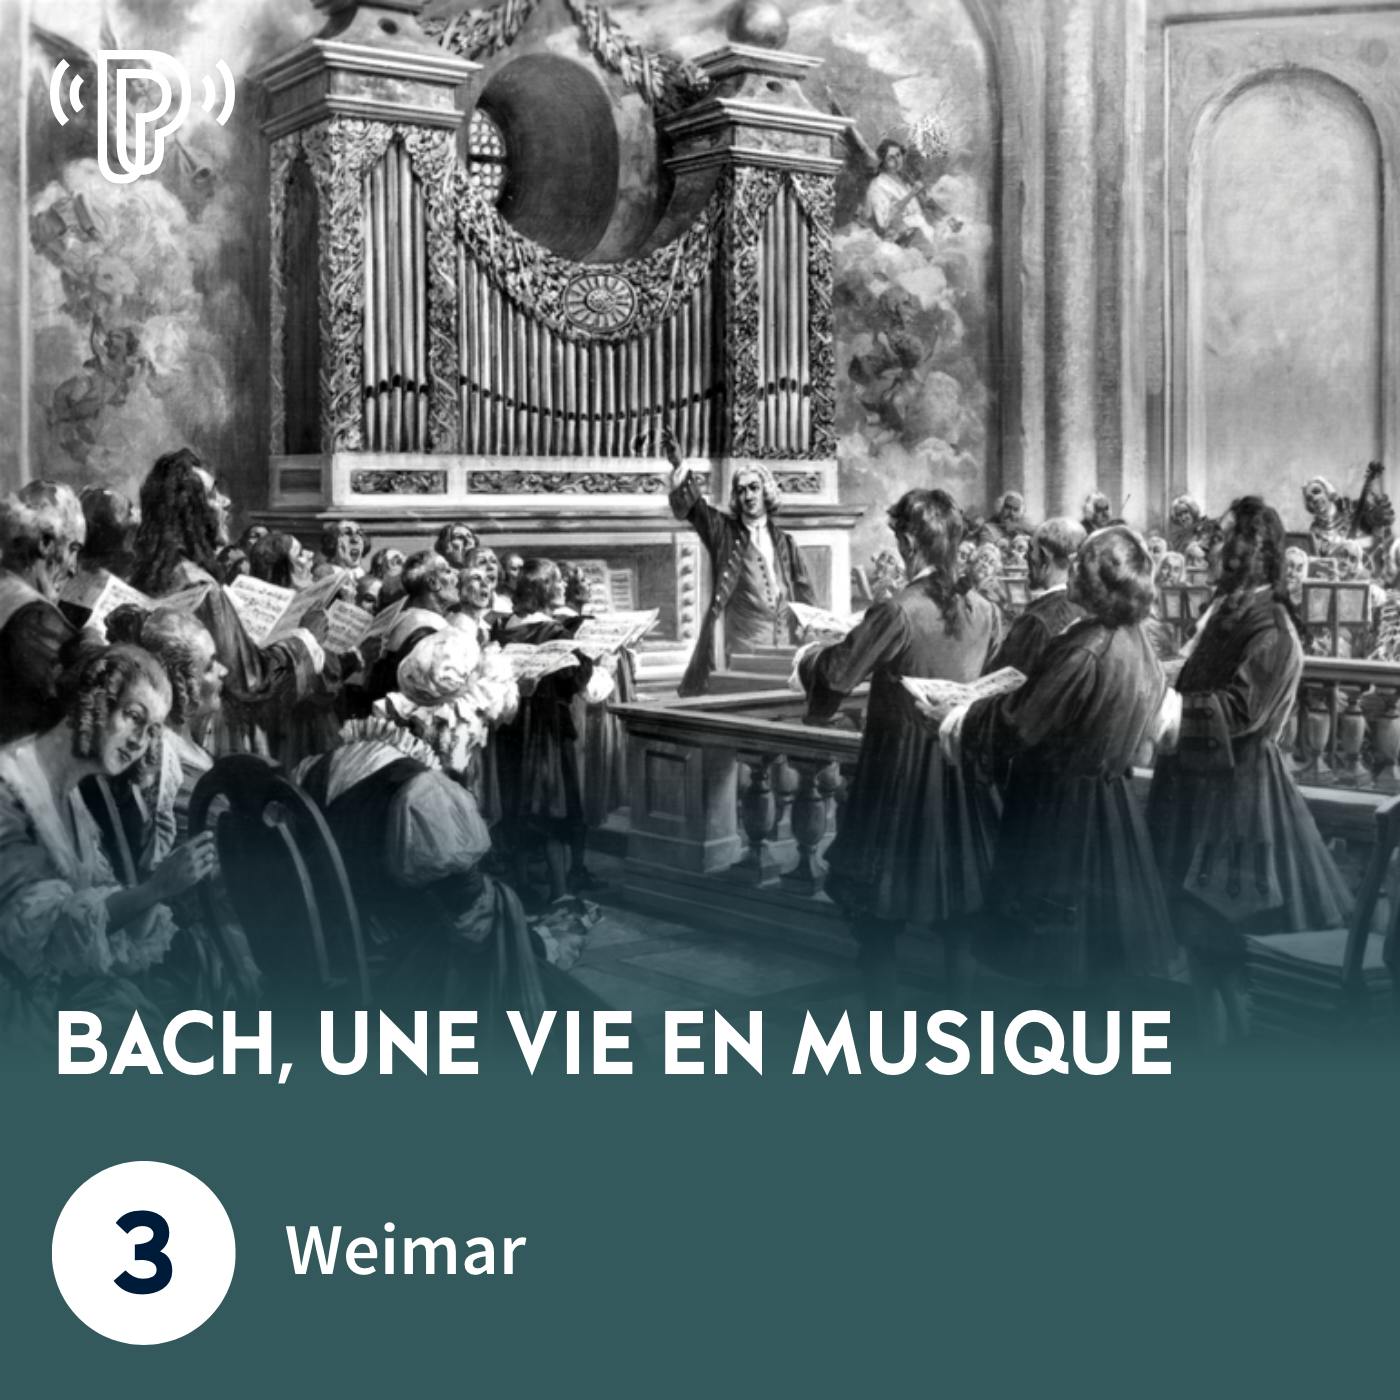 Bach, une vie en musique #3 - Weimar